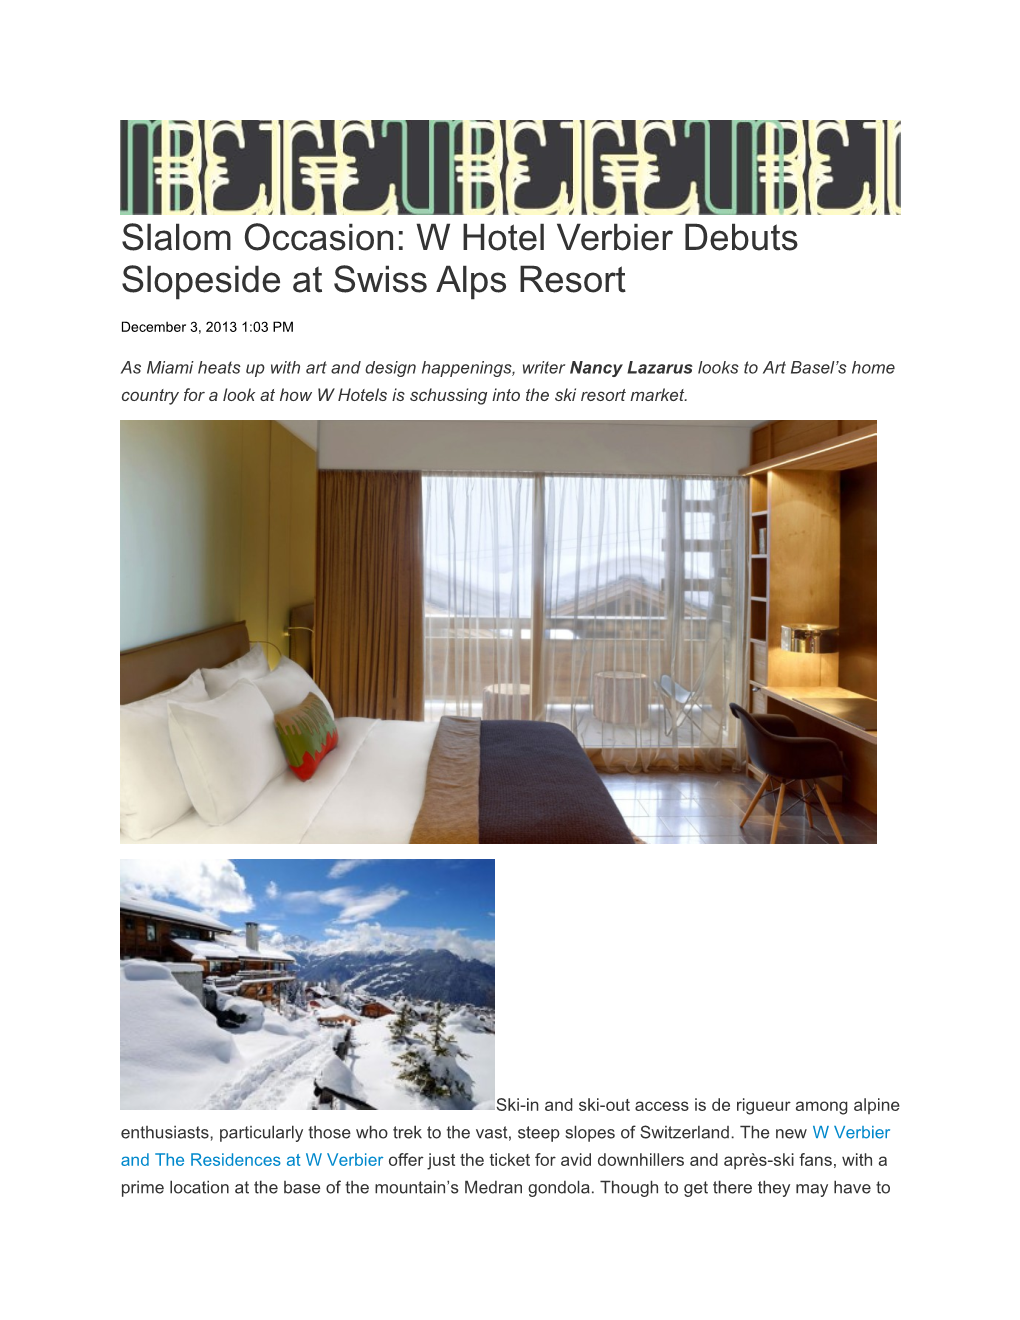 Slalom Occasion: W Hotel Verbier Debuts Slopeside at Swiss Alps Resort